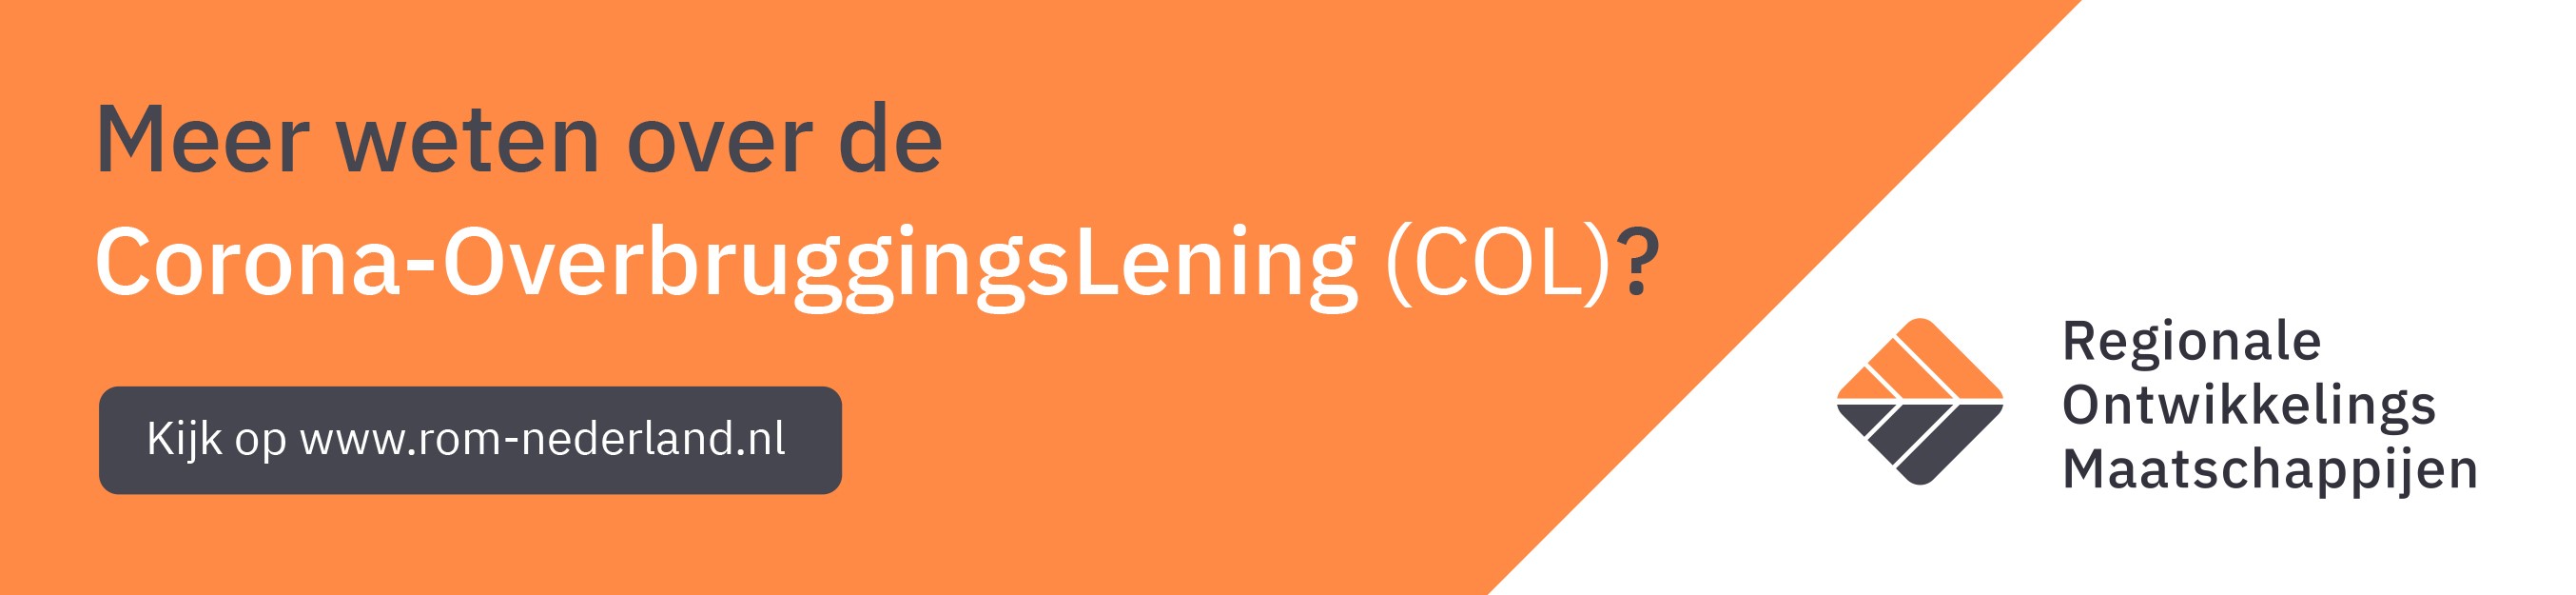 Corona-OverbrugginsLening (COL)